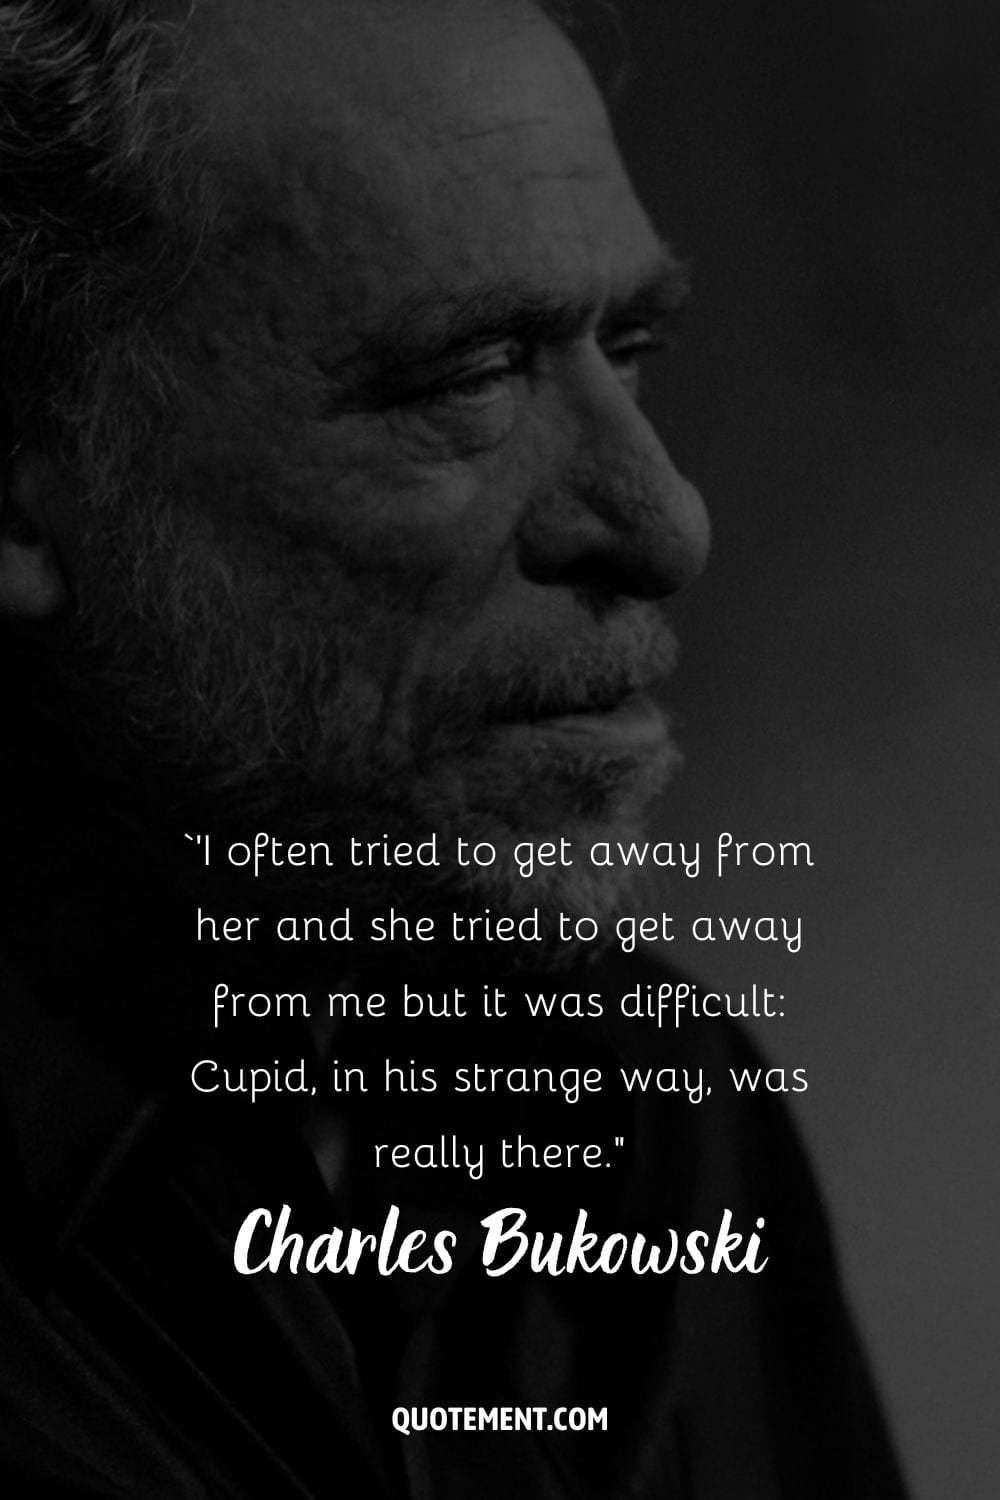 Bukowski's contemplative side profile